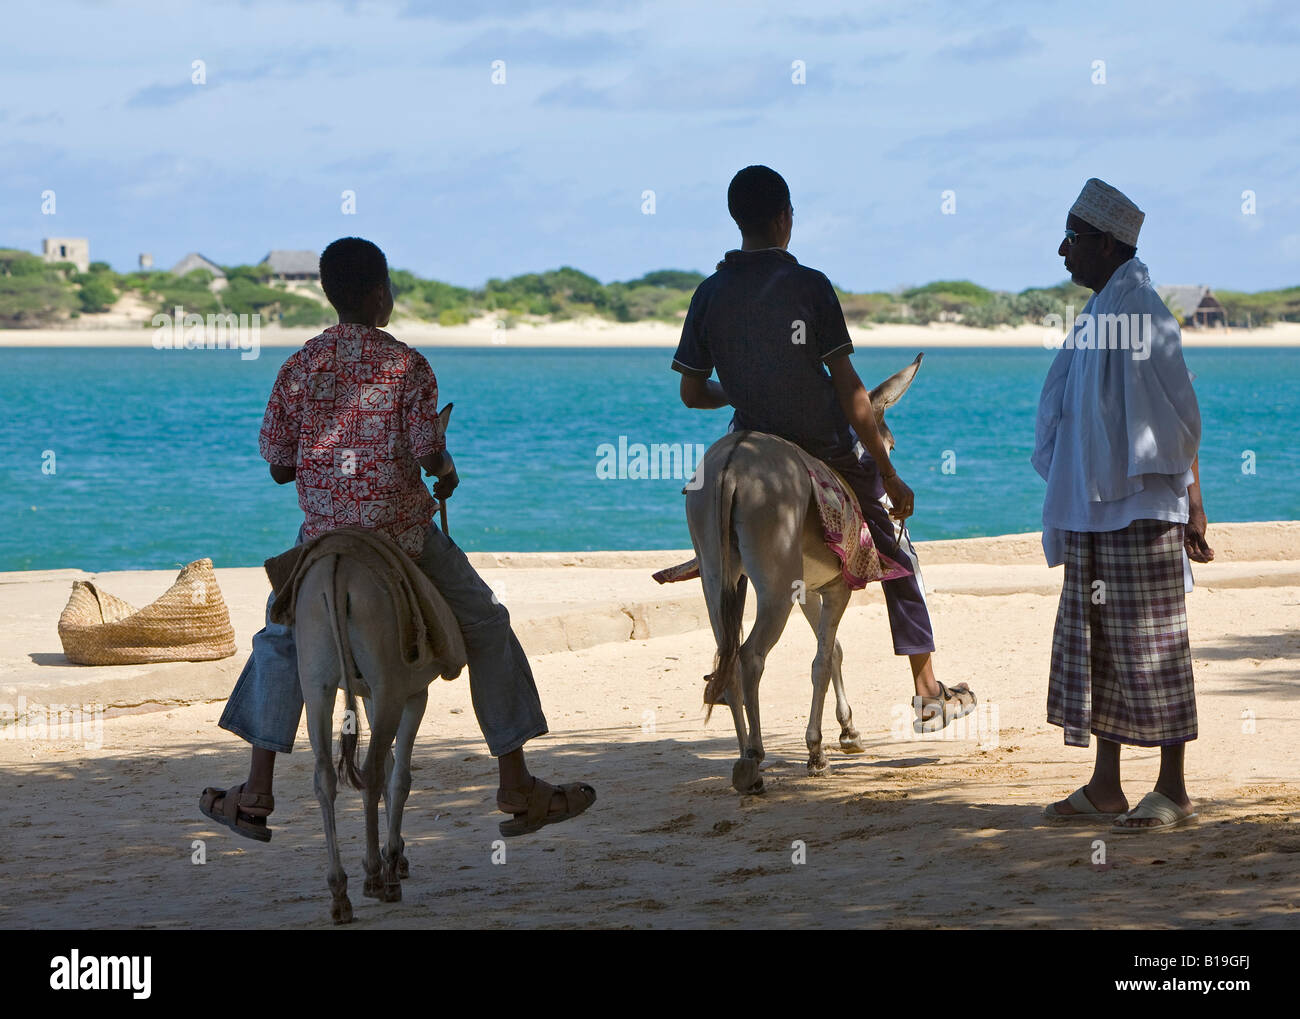 Kenya, Lamu Island, Shela. Two young men on donkeys ride past a Muslim man at Shela pier. Stock Photo